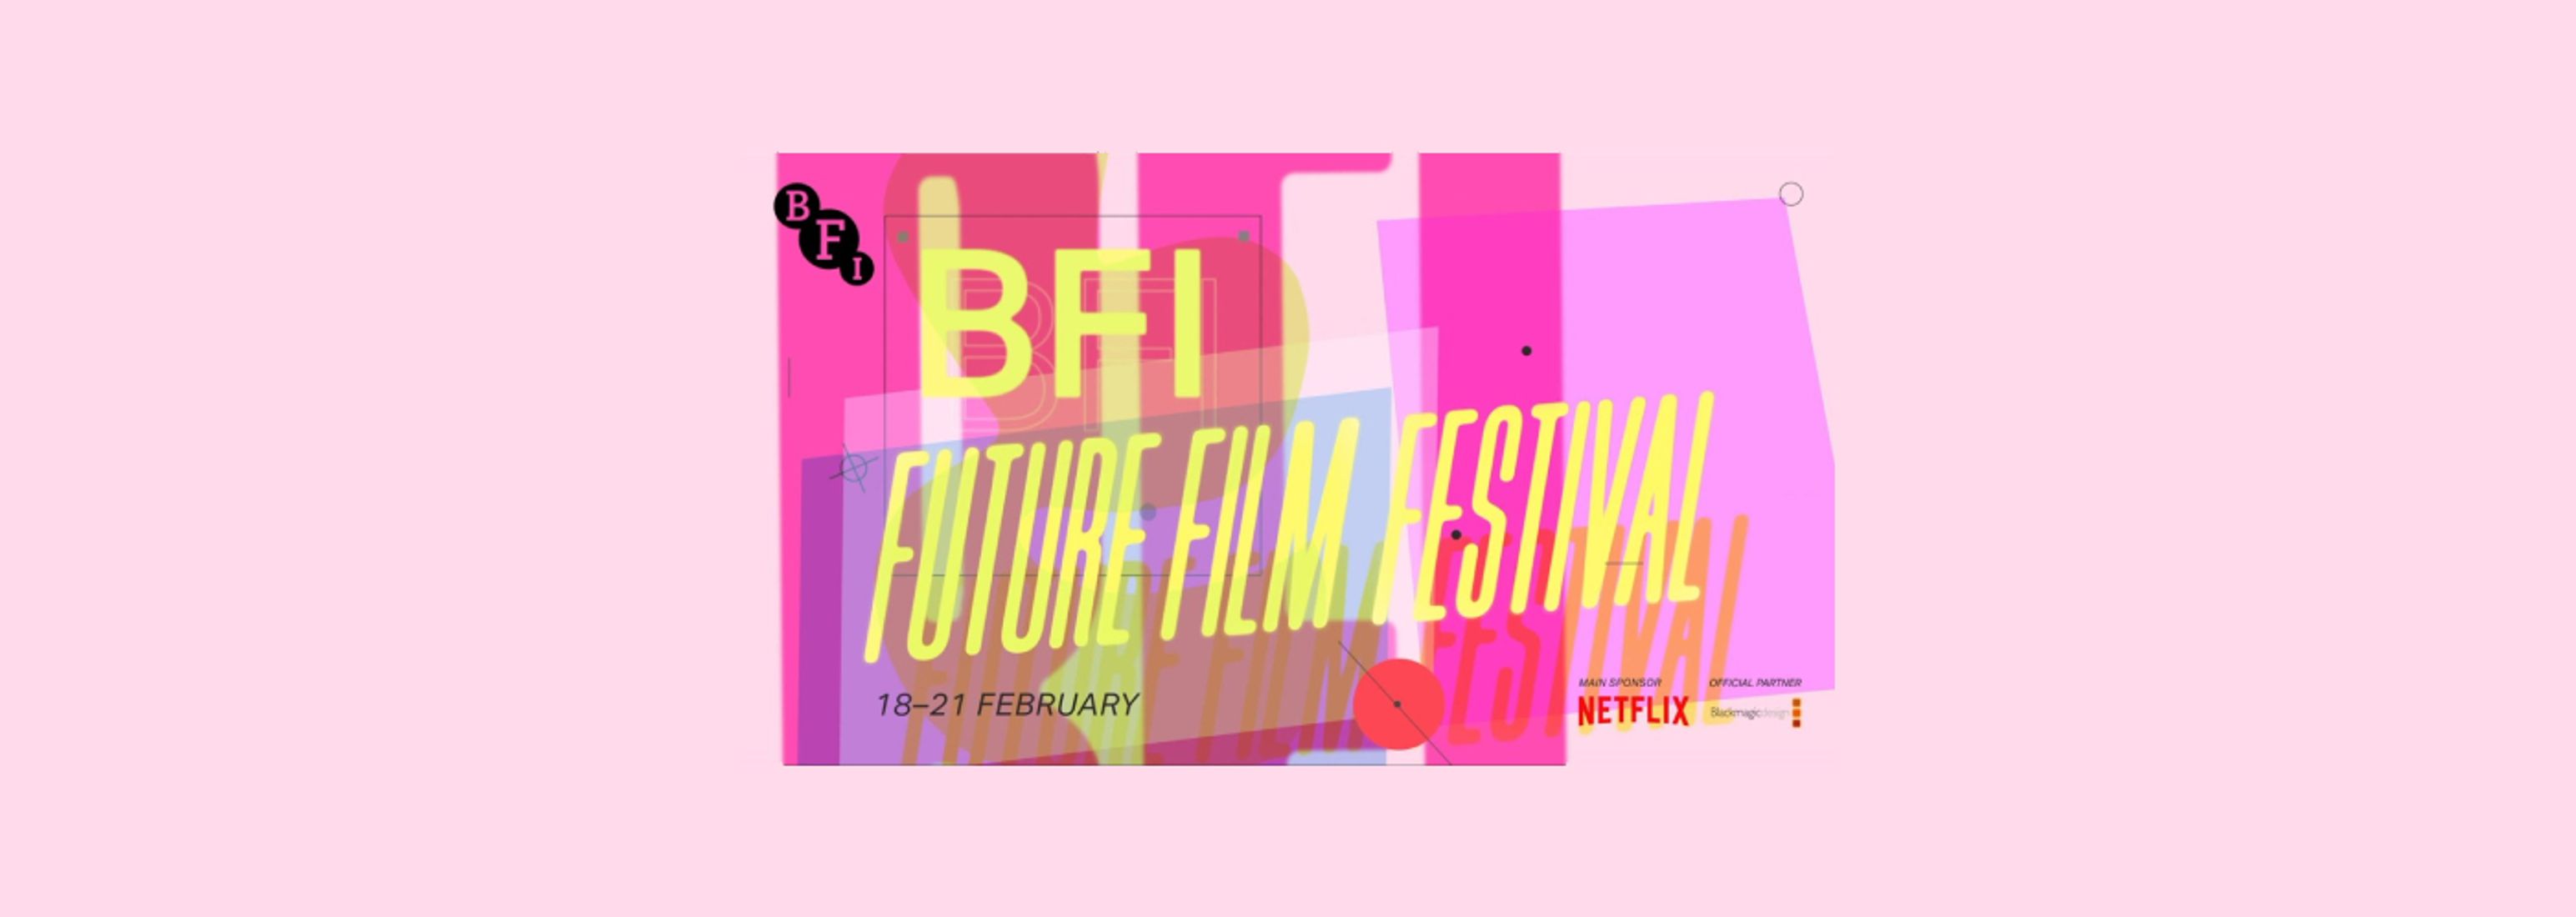 BFI Future Film Festival 2021 Awards Ceremony Event Tickets | The Dots